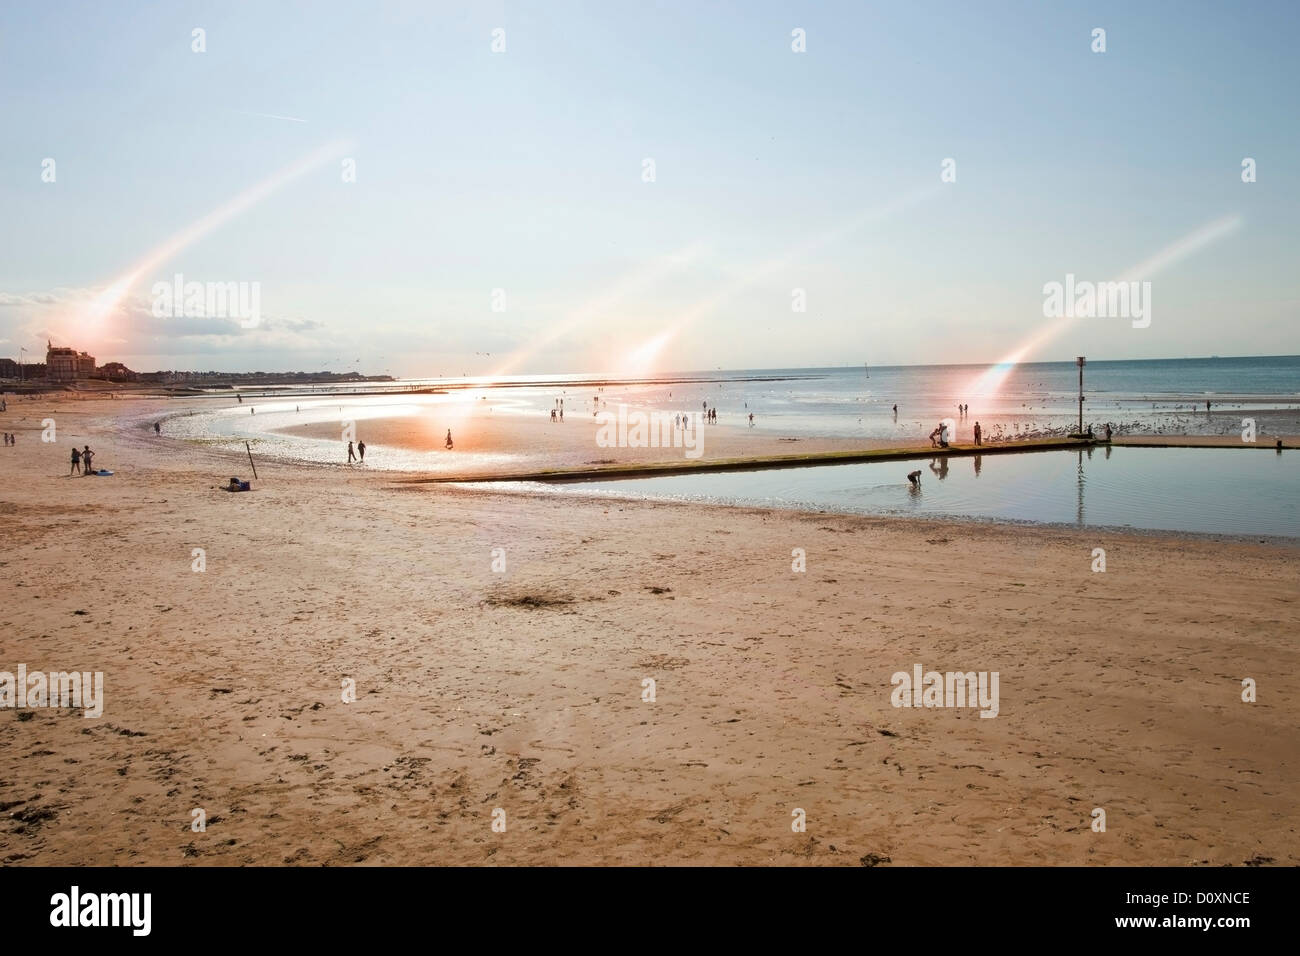 Beach scene with rays of light, Margate, Kent, UK Stock Photo